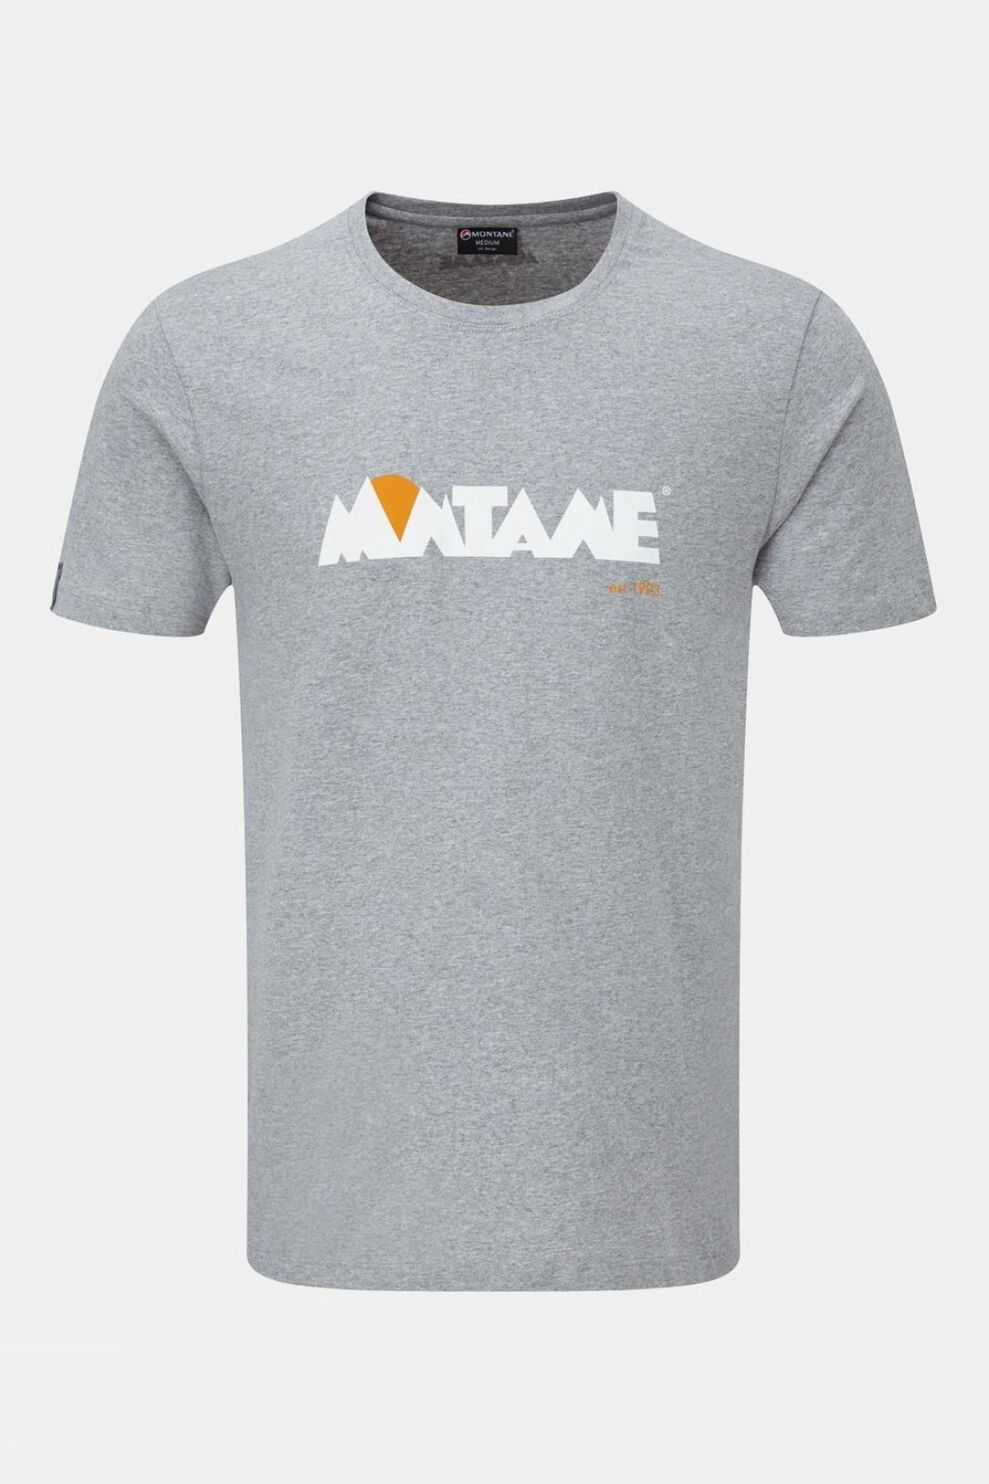 Montane Mens Heritage 1993 T-Shirt